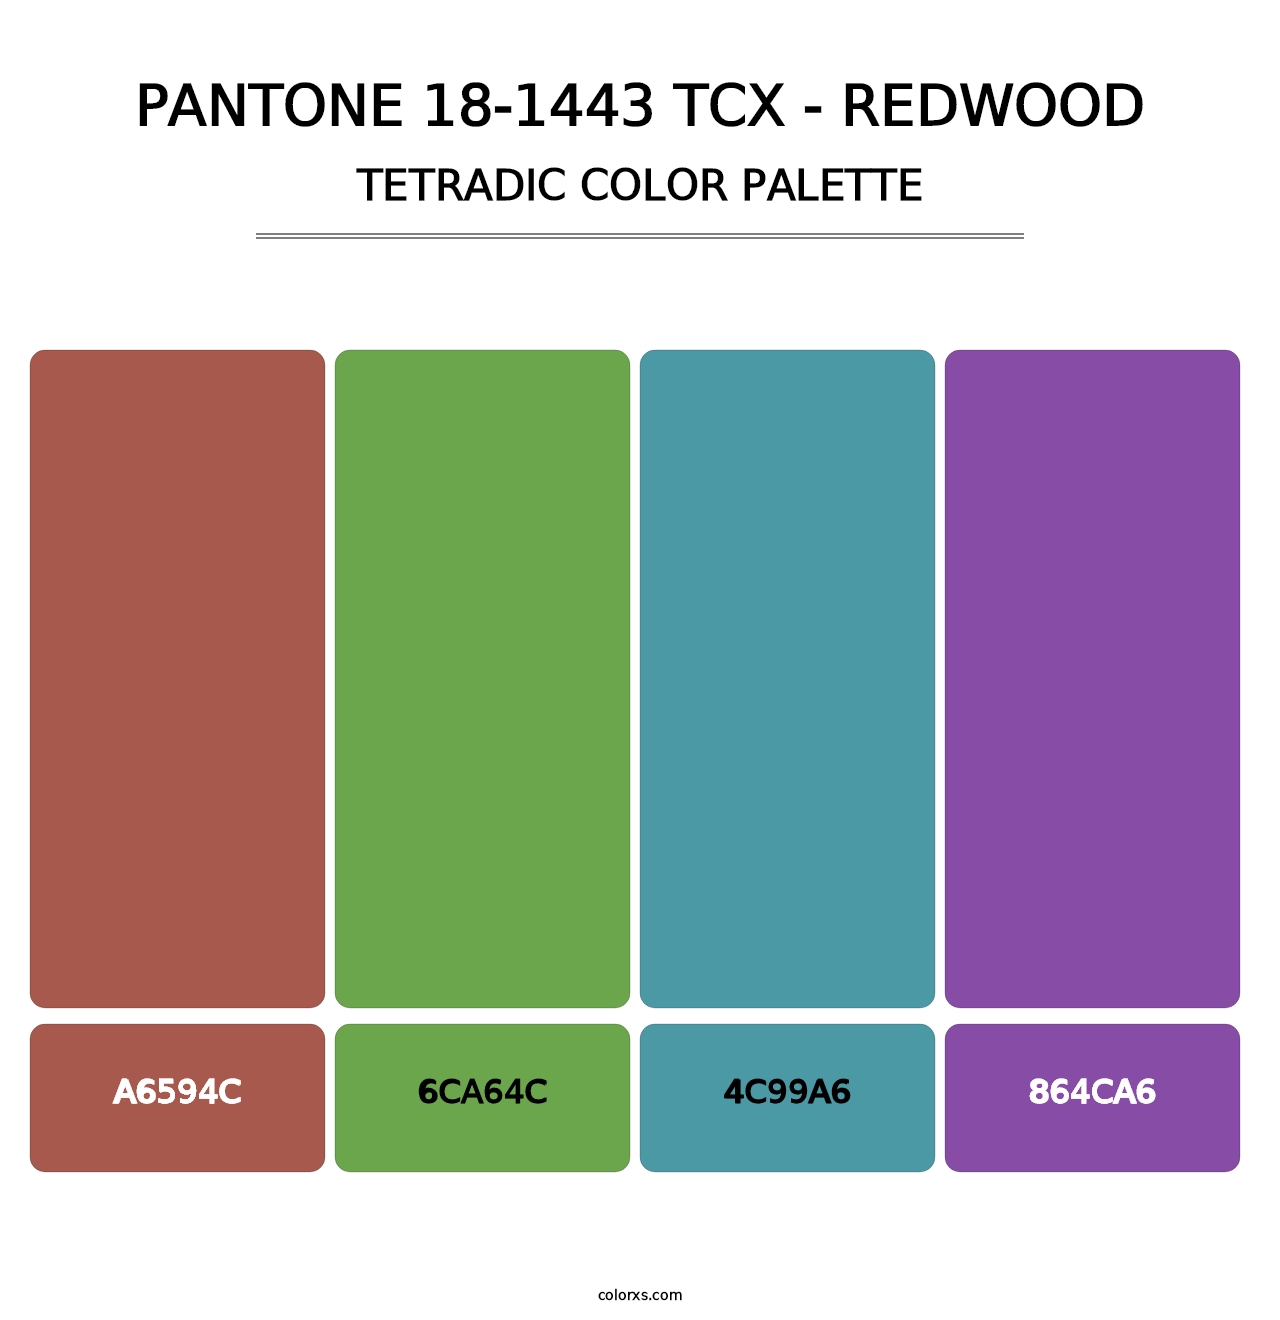 PANTONE 18-1443 TCX - Redwood - Tetradic Color Palette